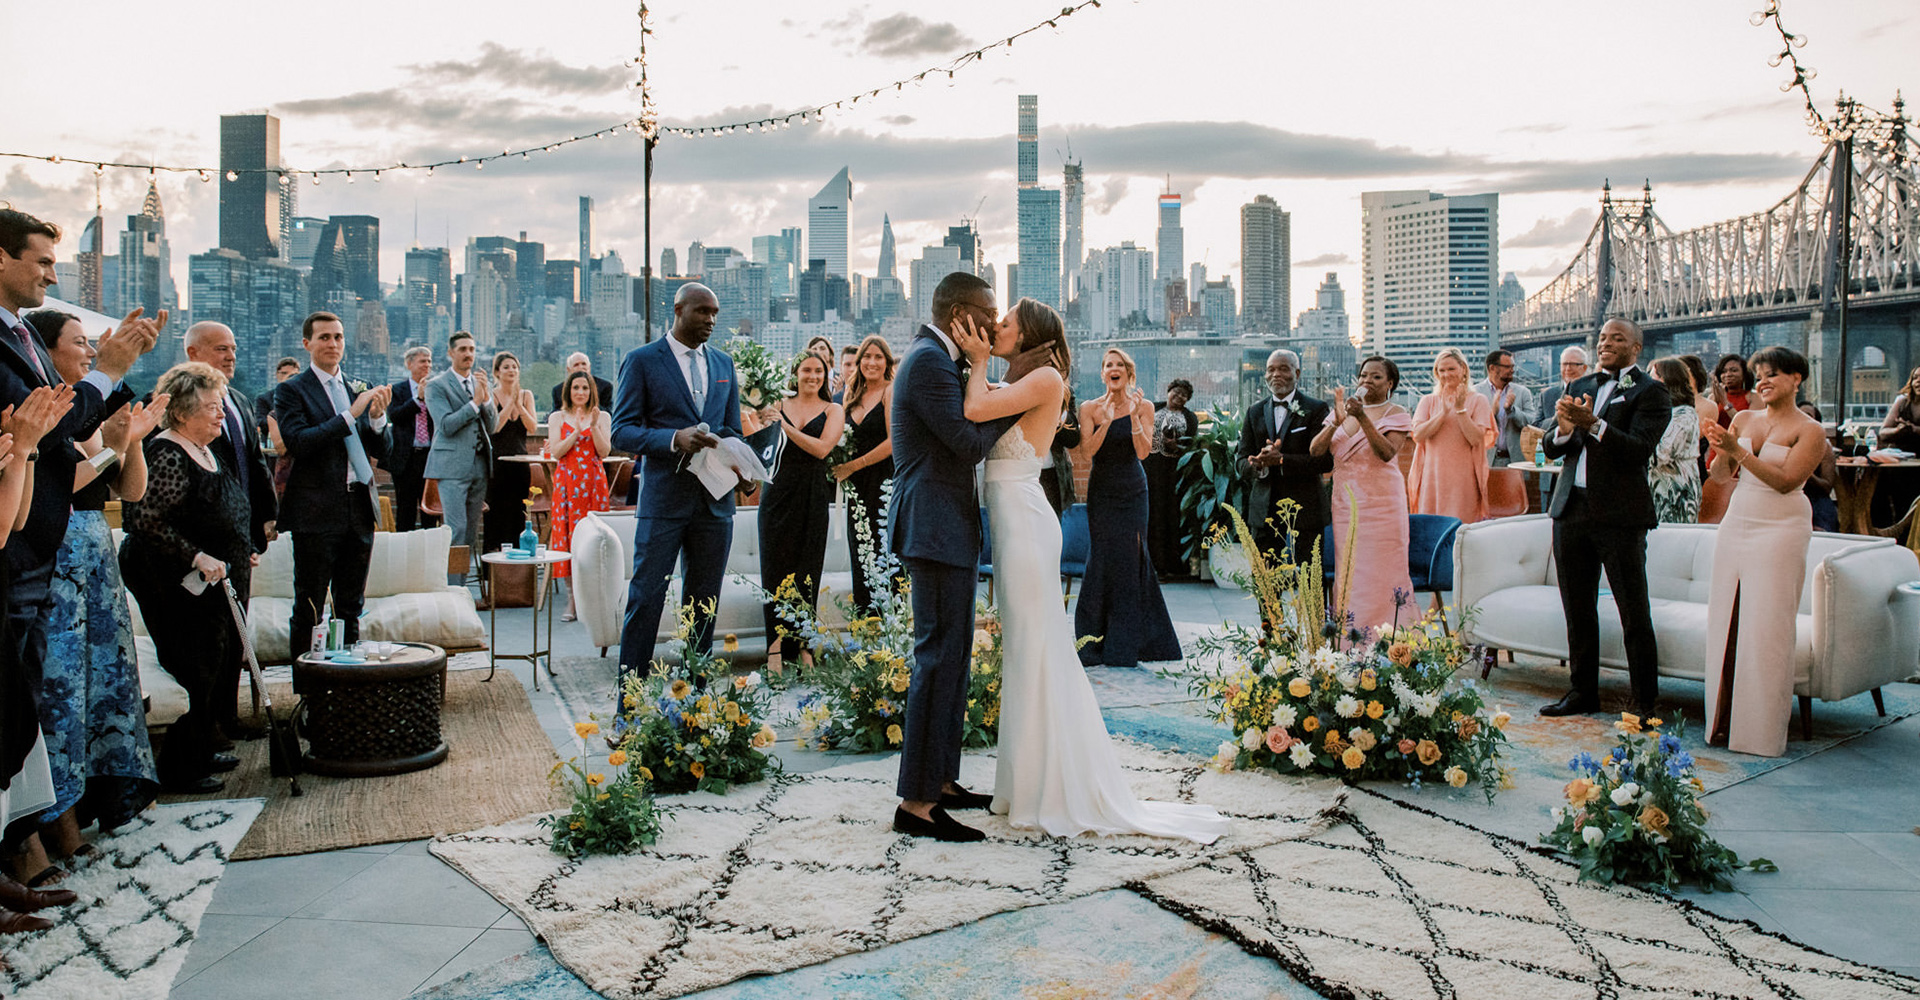 skyline ceremony in new york city, nyc wedding photographers